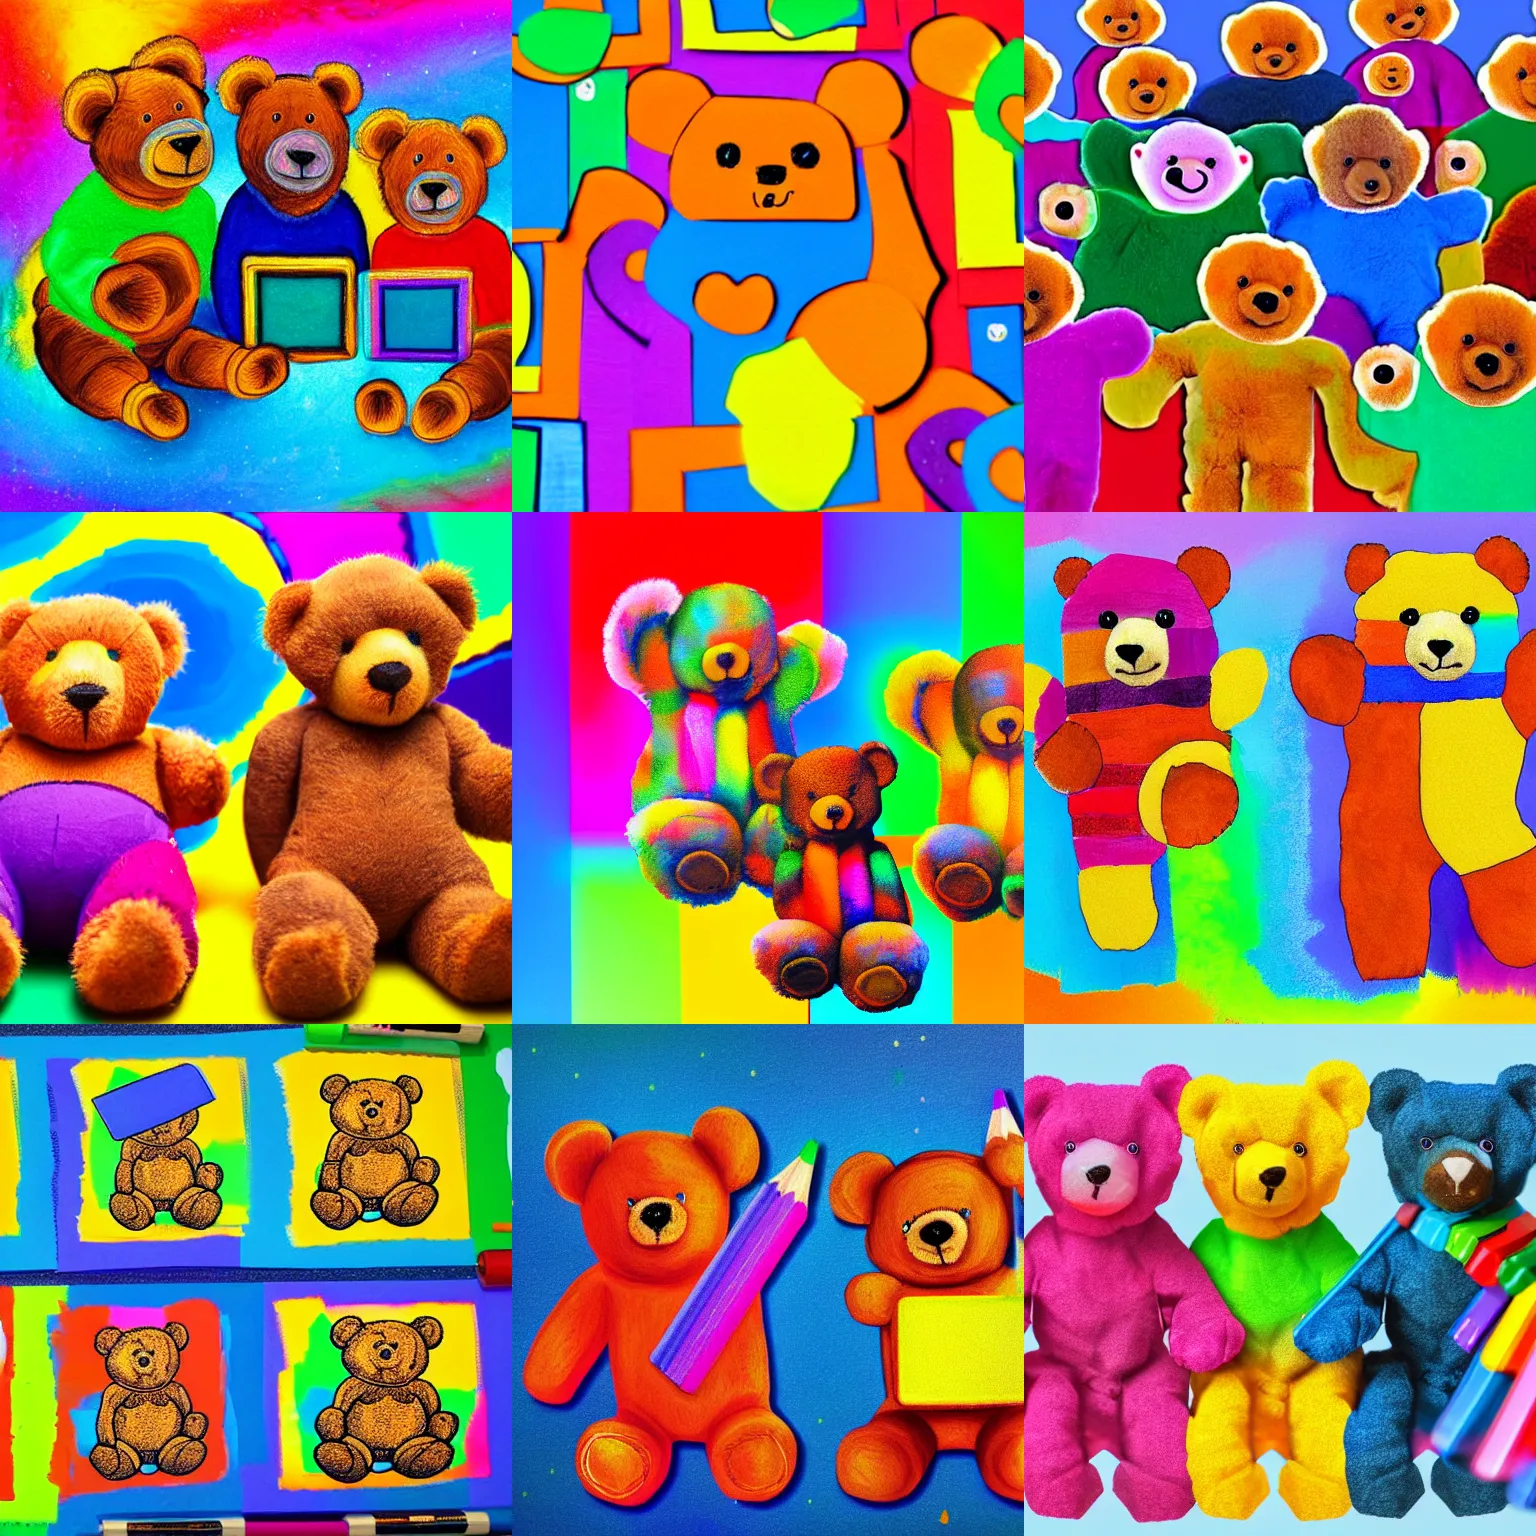 Prompt: teddy bears working on computers as kids'crayon art